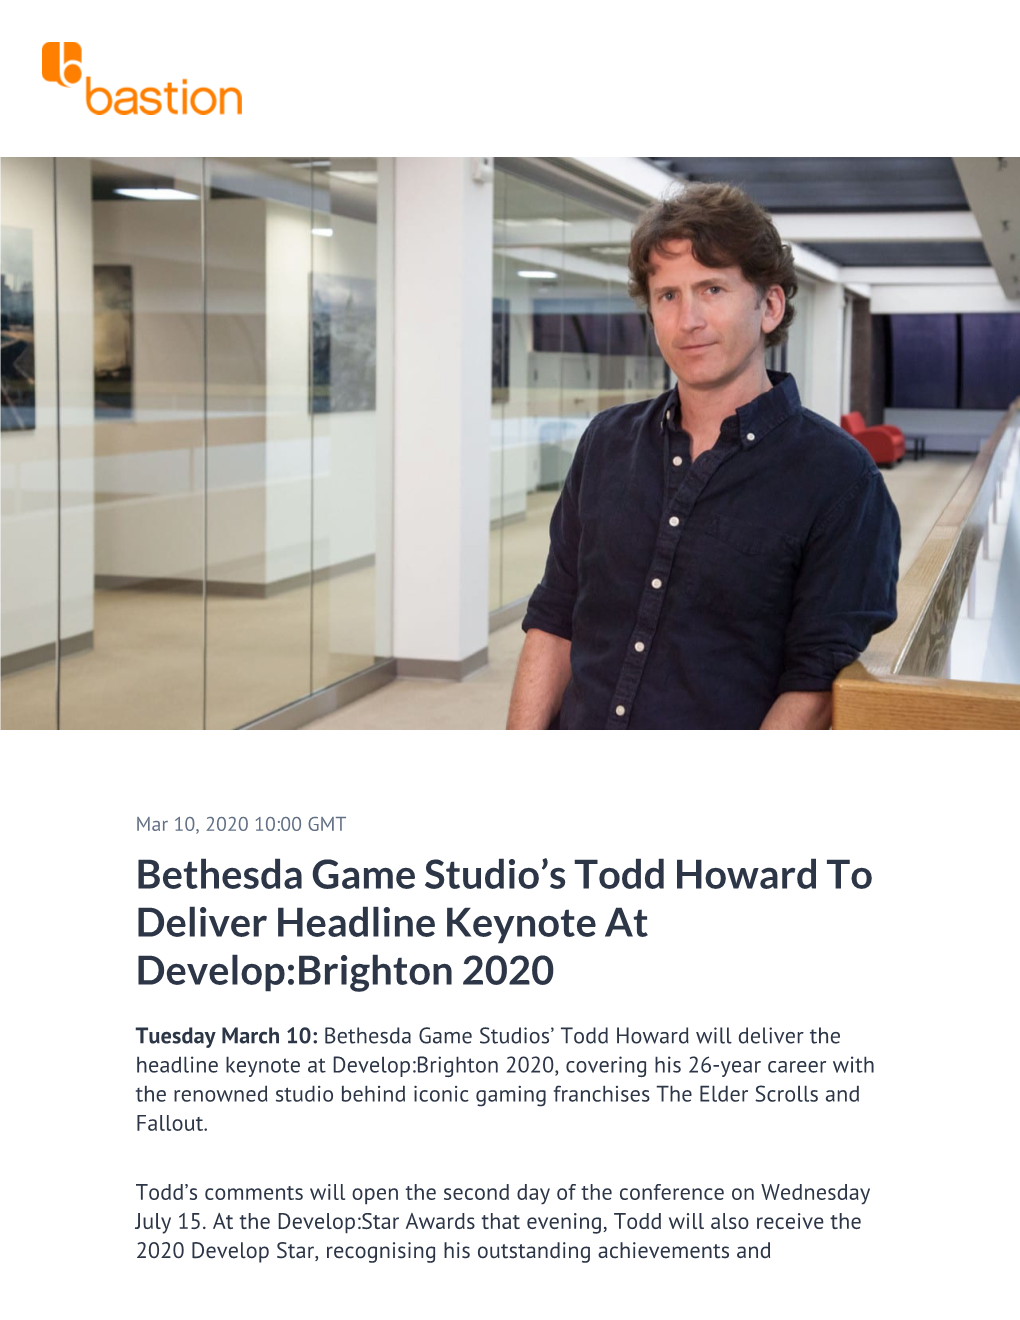 Bethesda Game Studio's Todd Howard to Deliver Headline